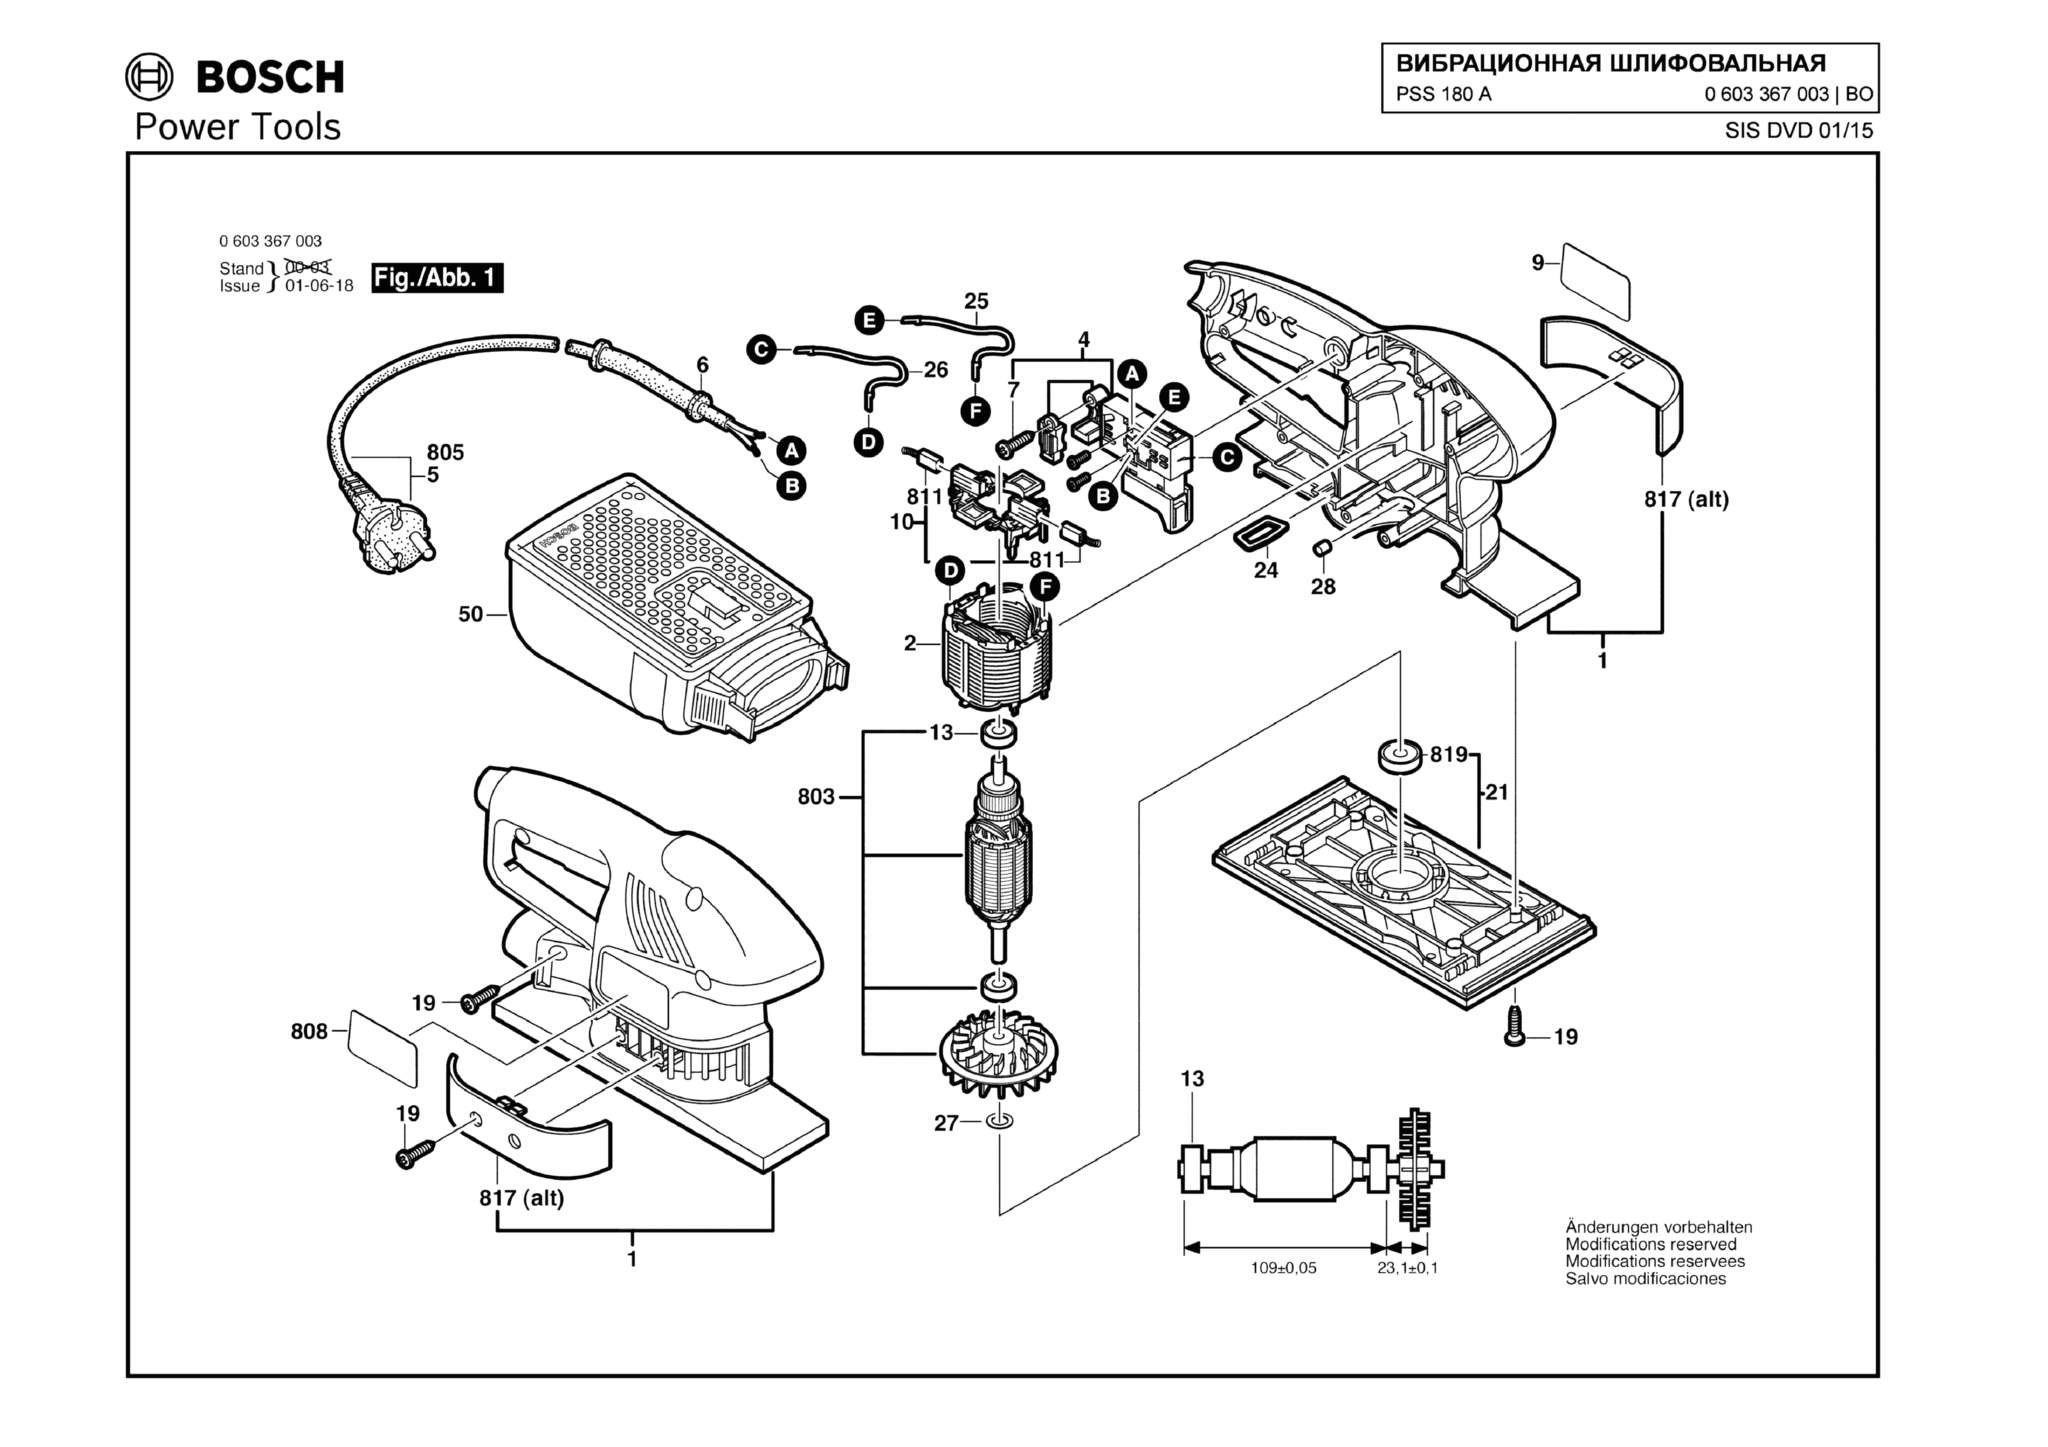 Запчасти, схема и деталировка Bosch PSS 180 A (ТИП 0603367003)